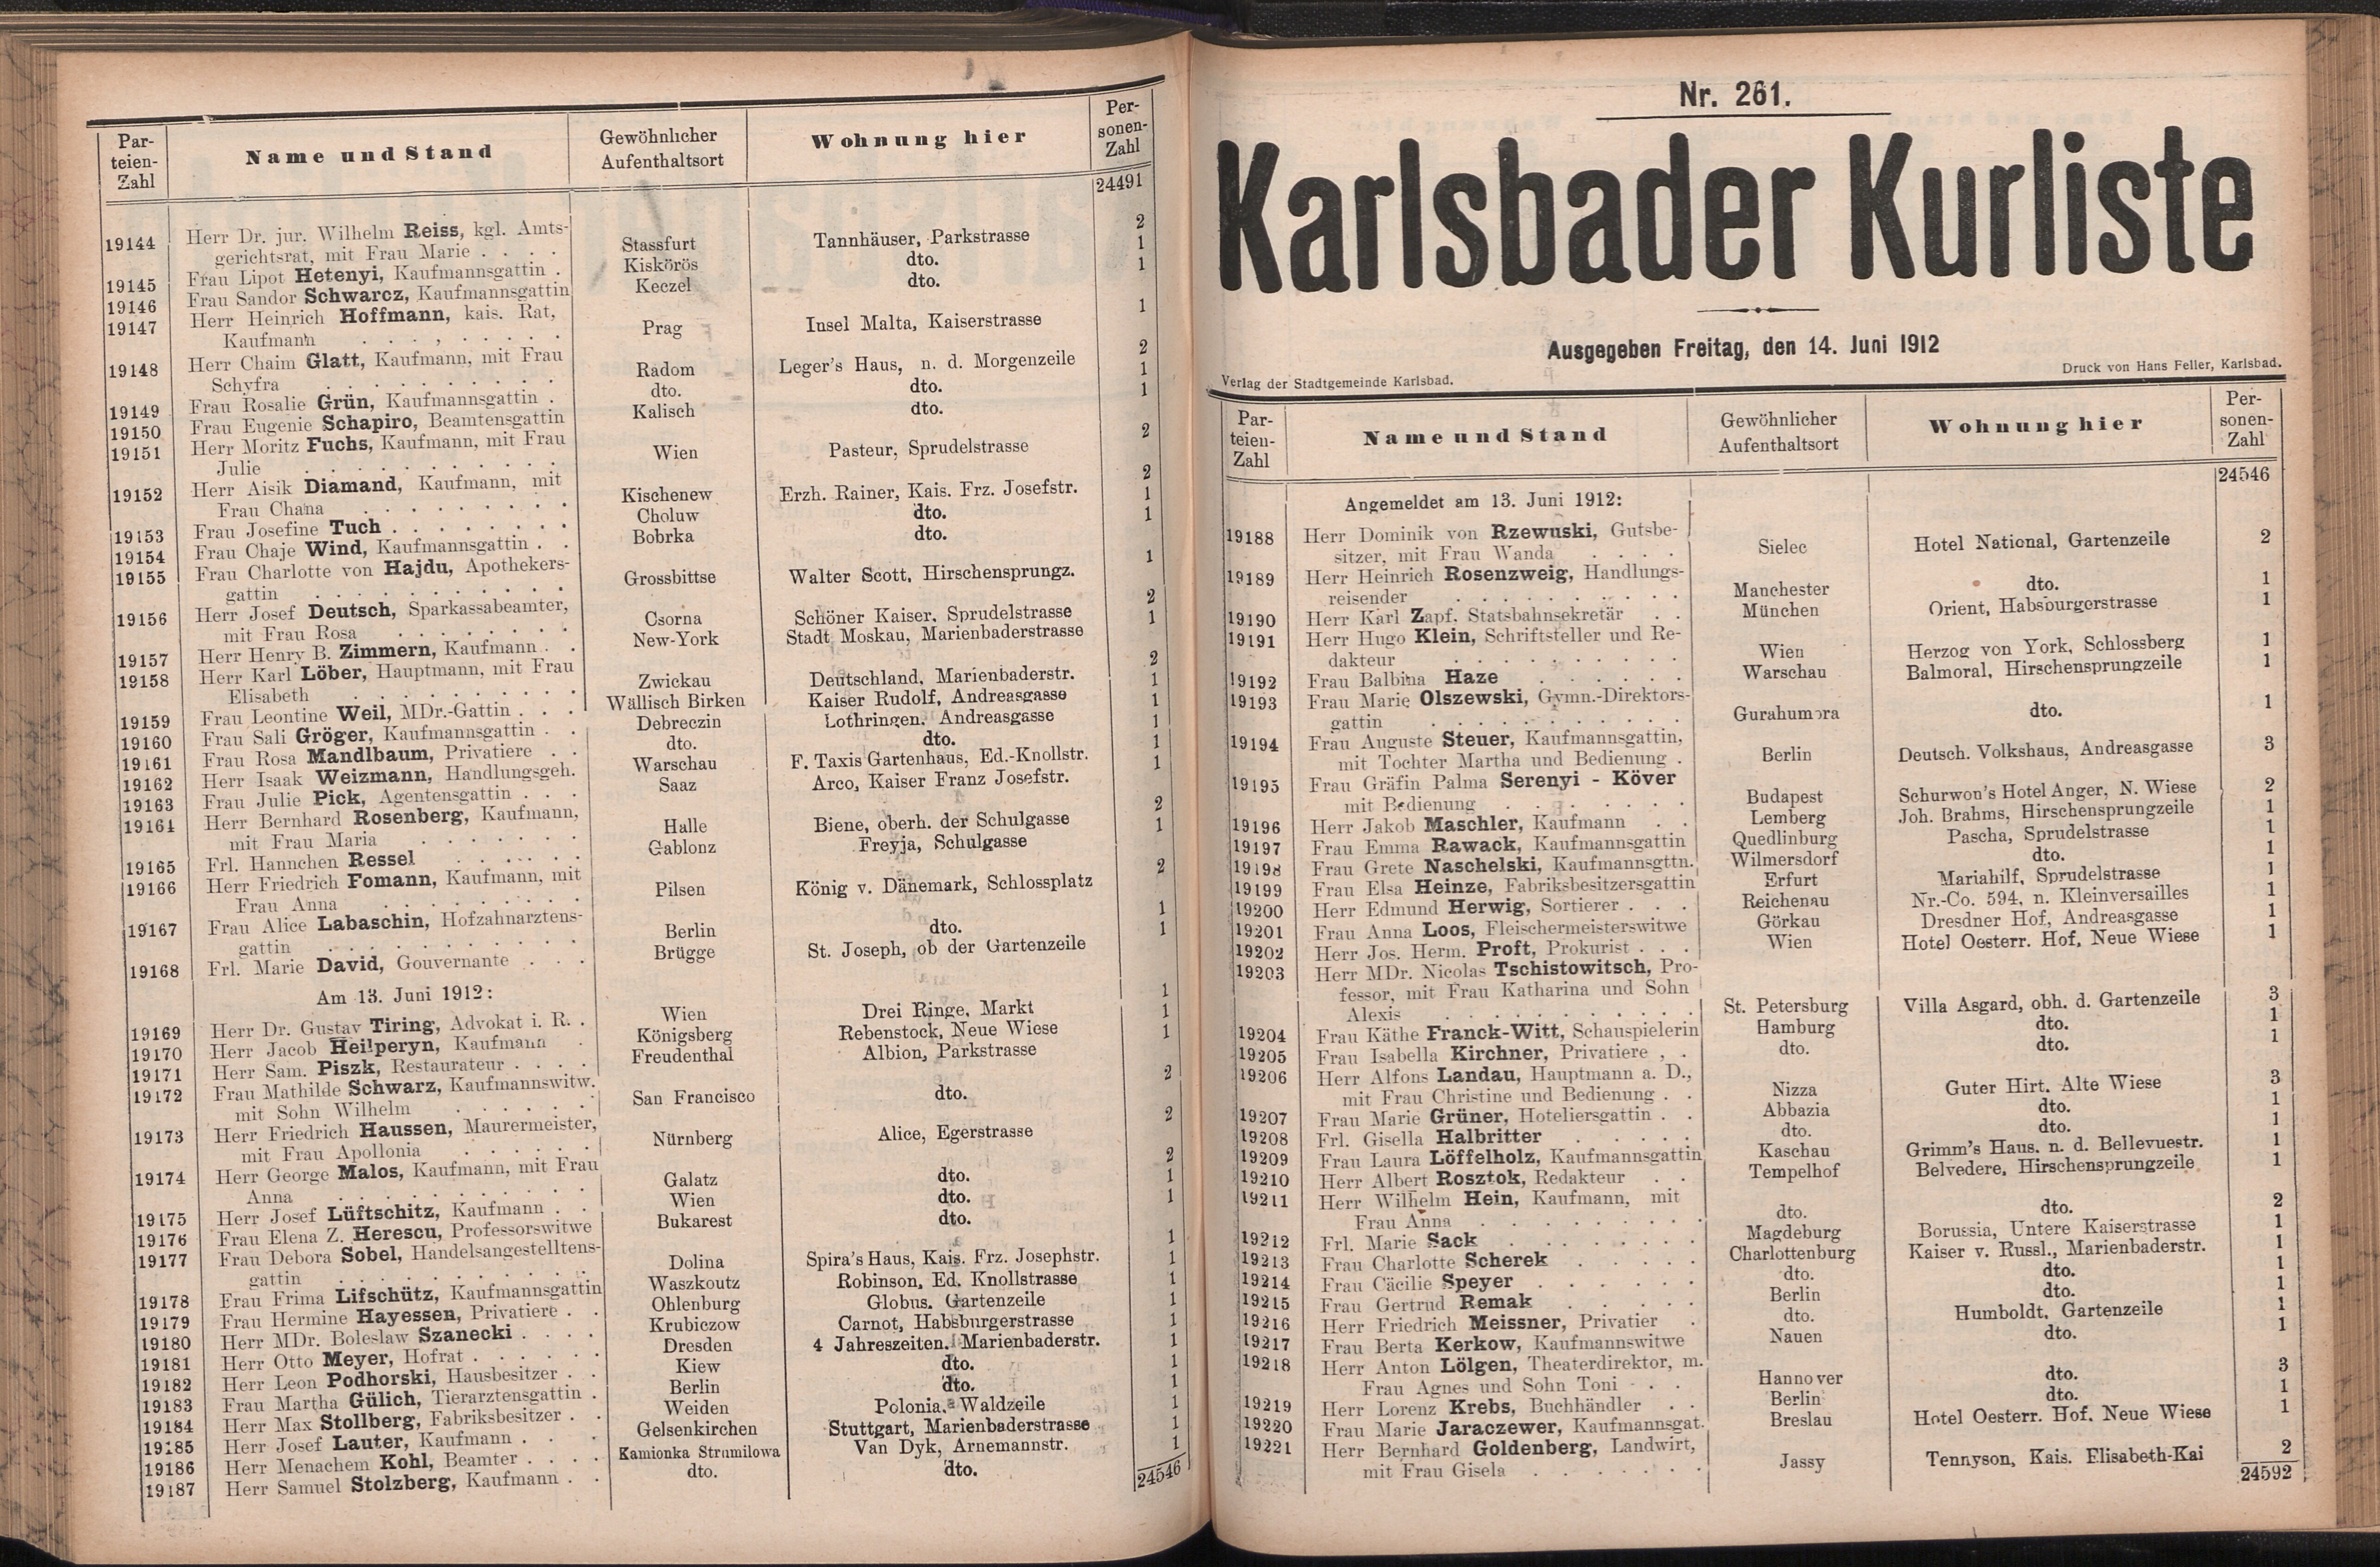 318. soap-kv_knihovna_karlsbader-kurliste-1912-1_3180